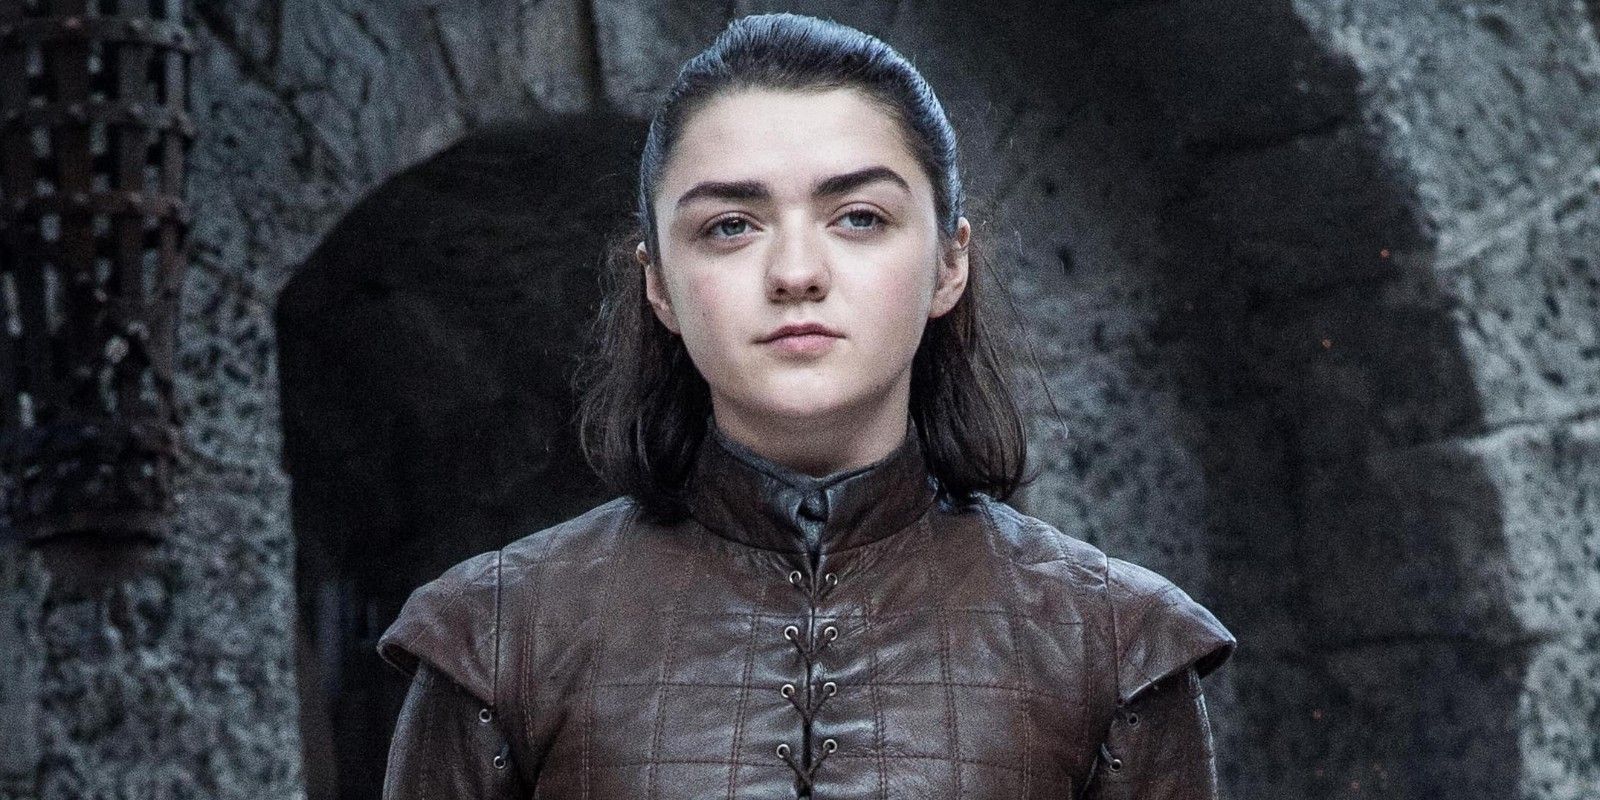 Arya Stark from Game of Thrones